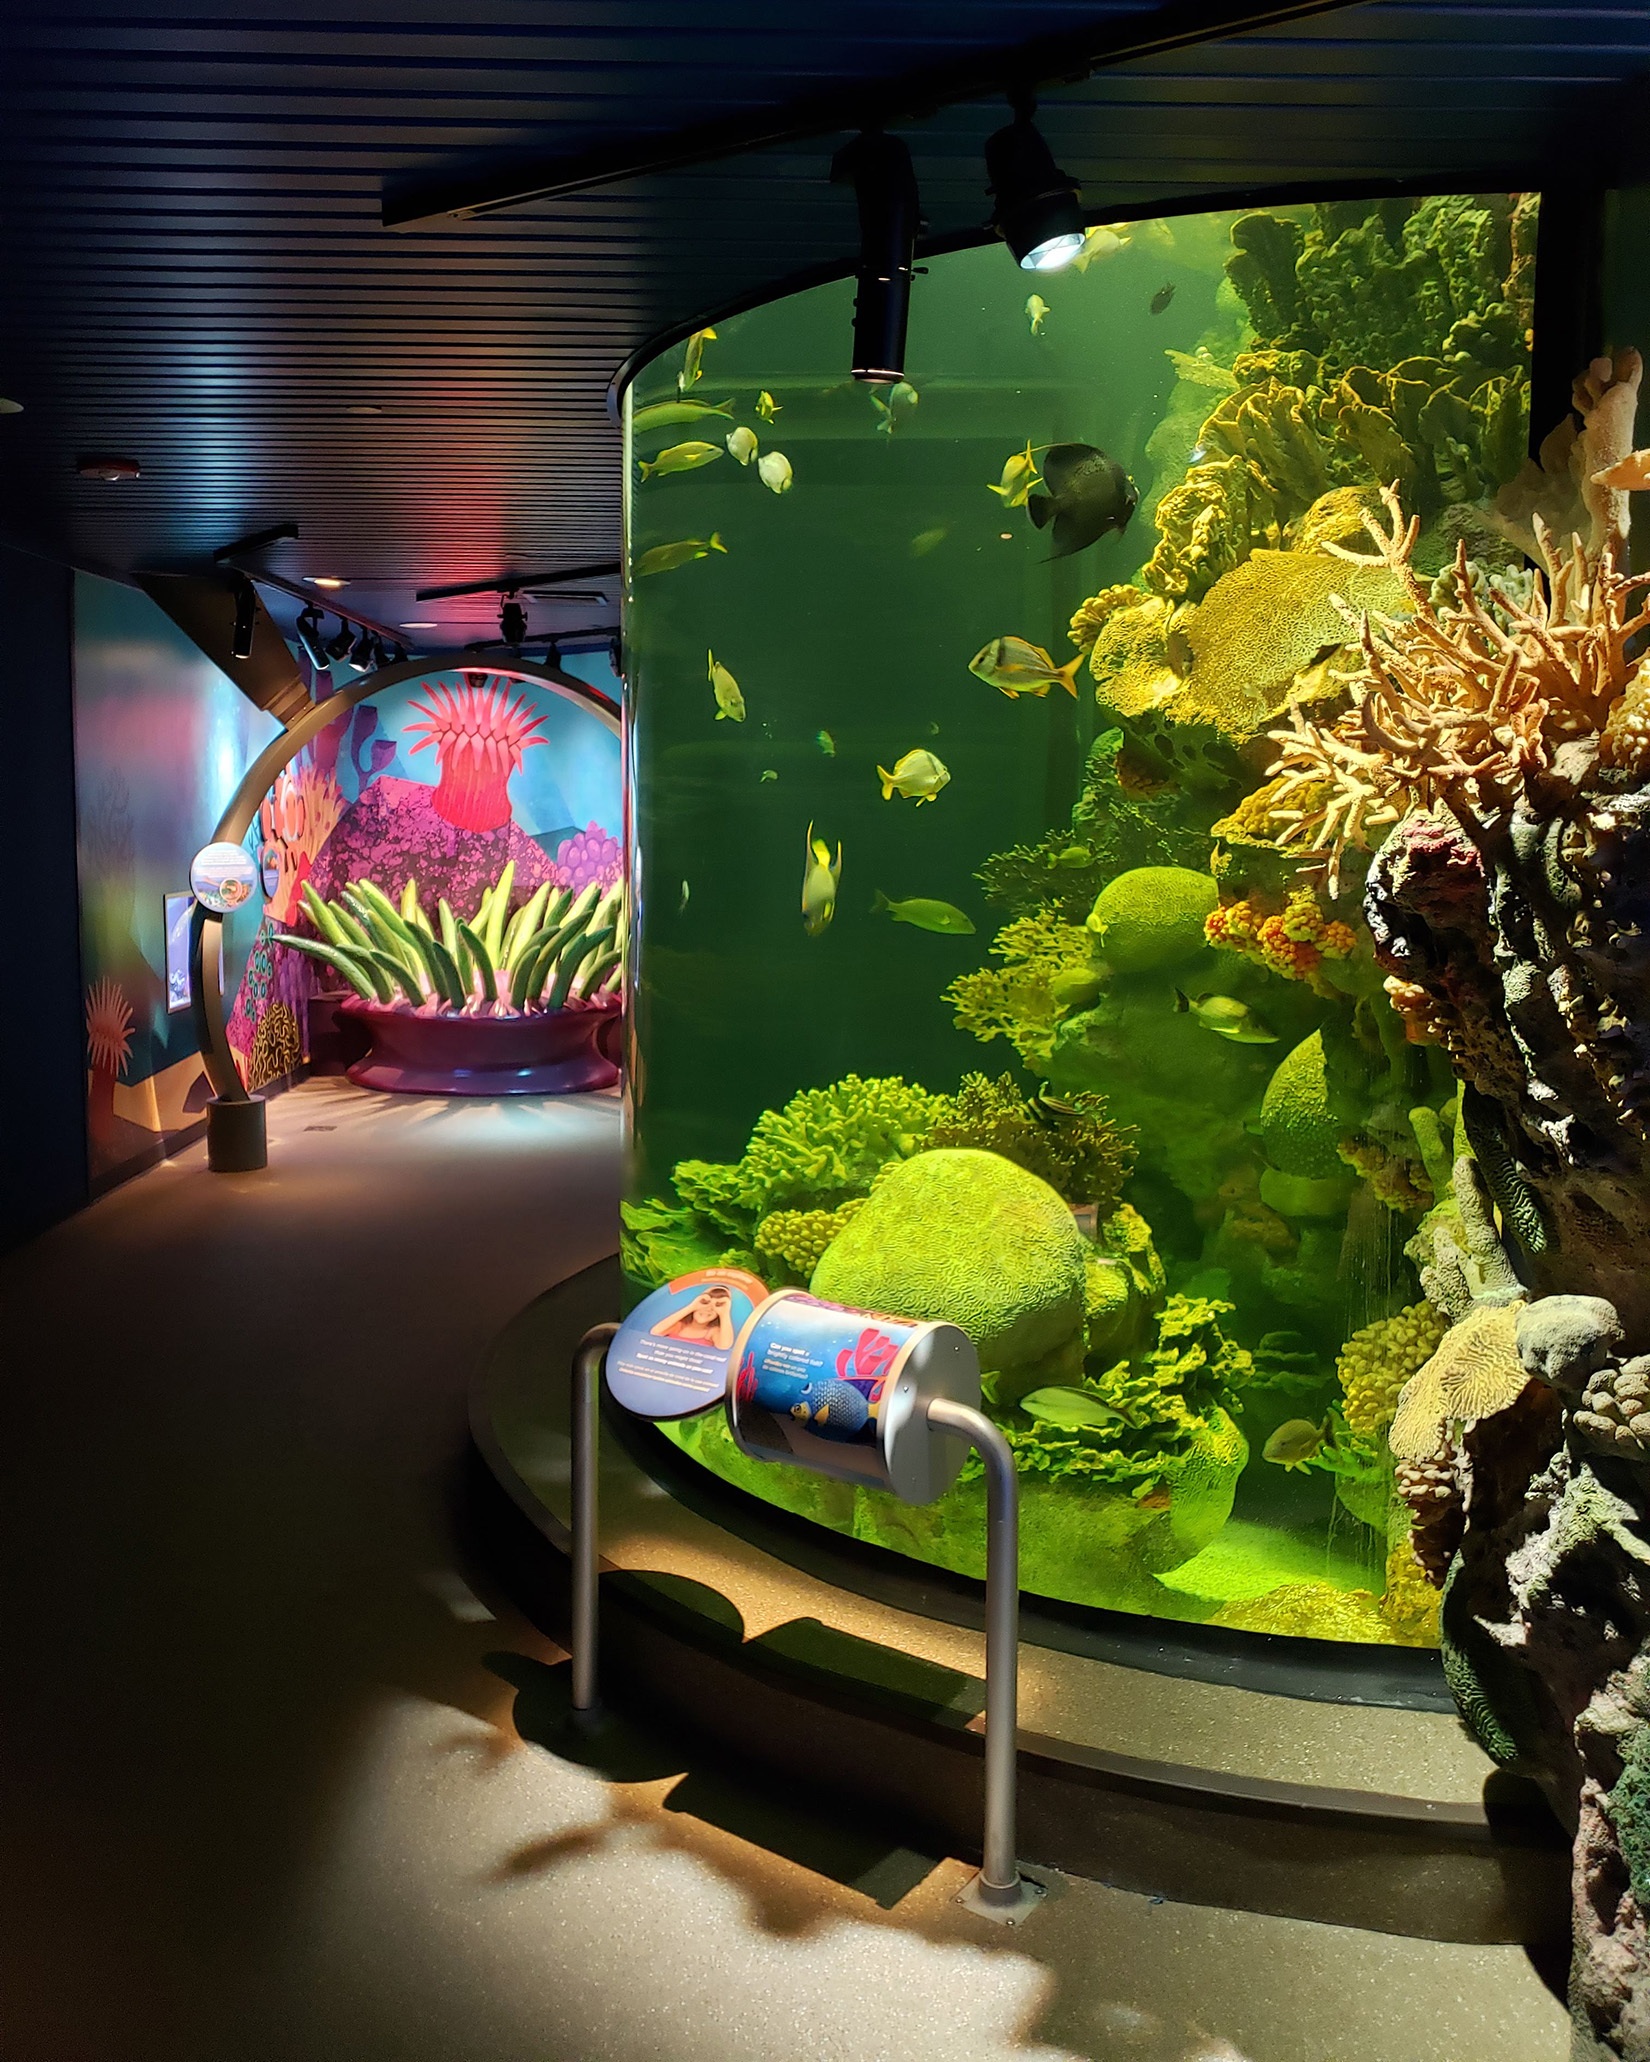 Coral and fish at the New York Aquarium